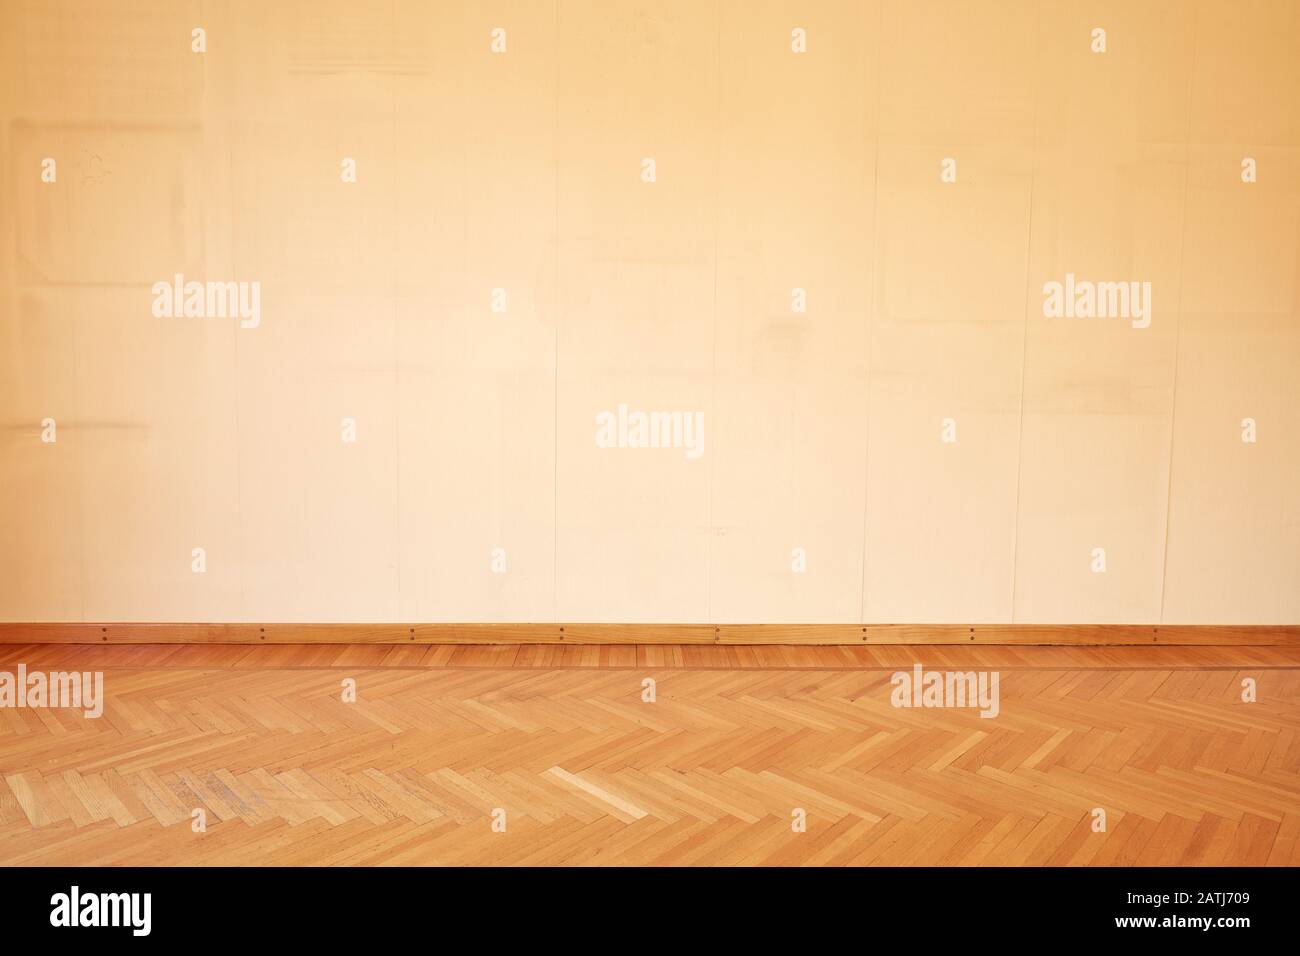 Old, empty room interior with wooden floor Stock Photo